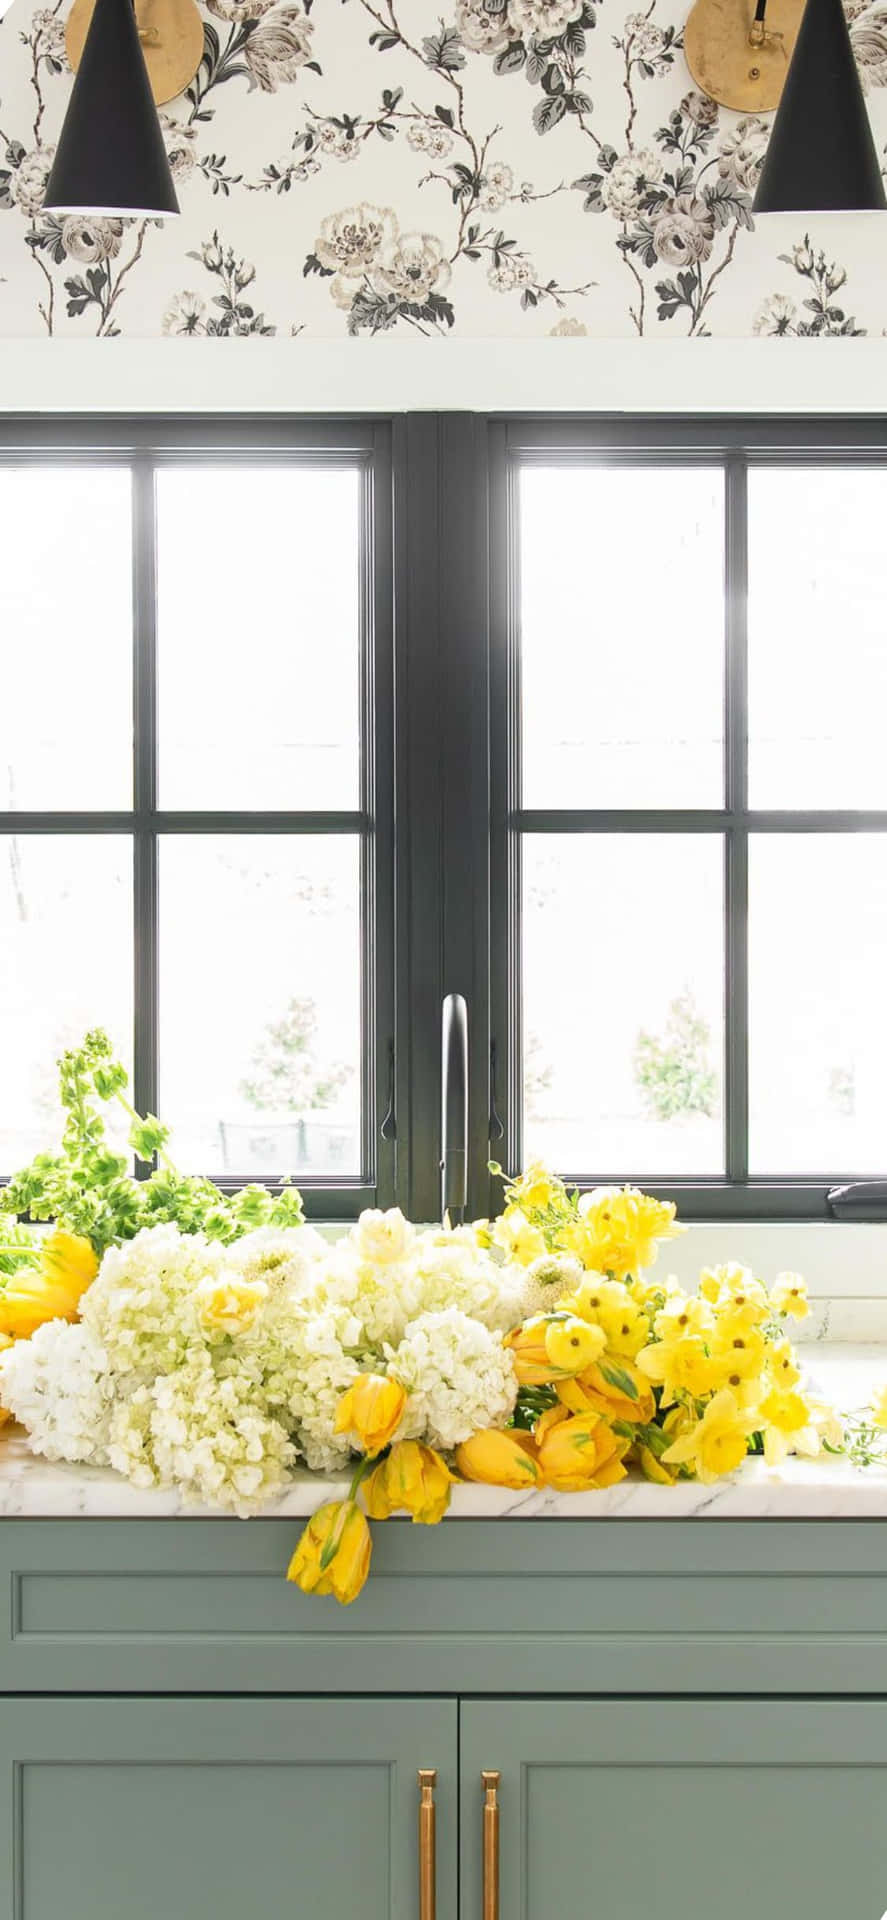 Flower In Counter Iphone X Kitchen Background